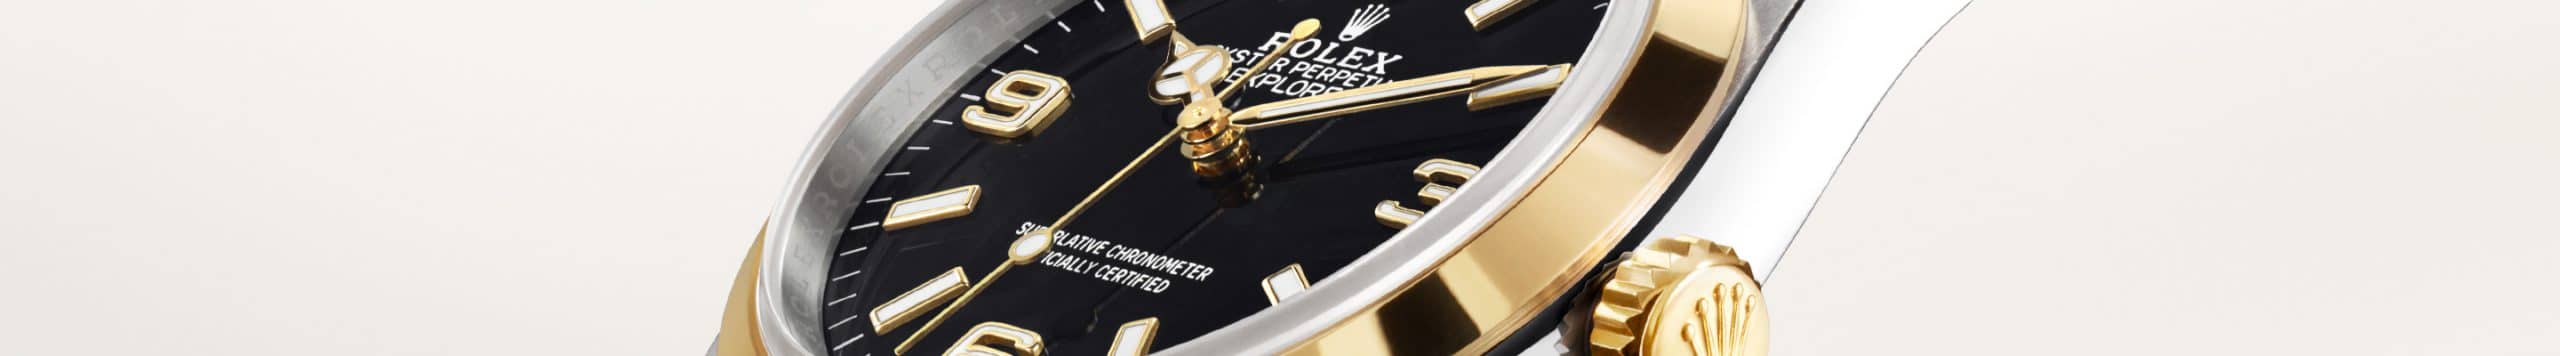 Rolex Explorer | Rolex Official Retailer - The Time Place Singapore